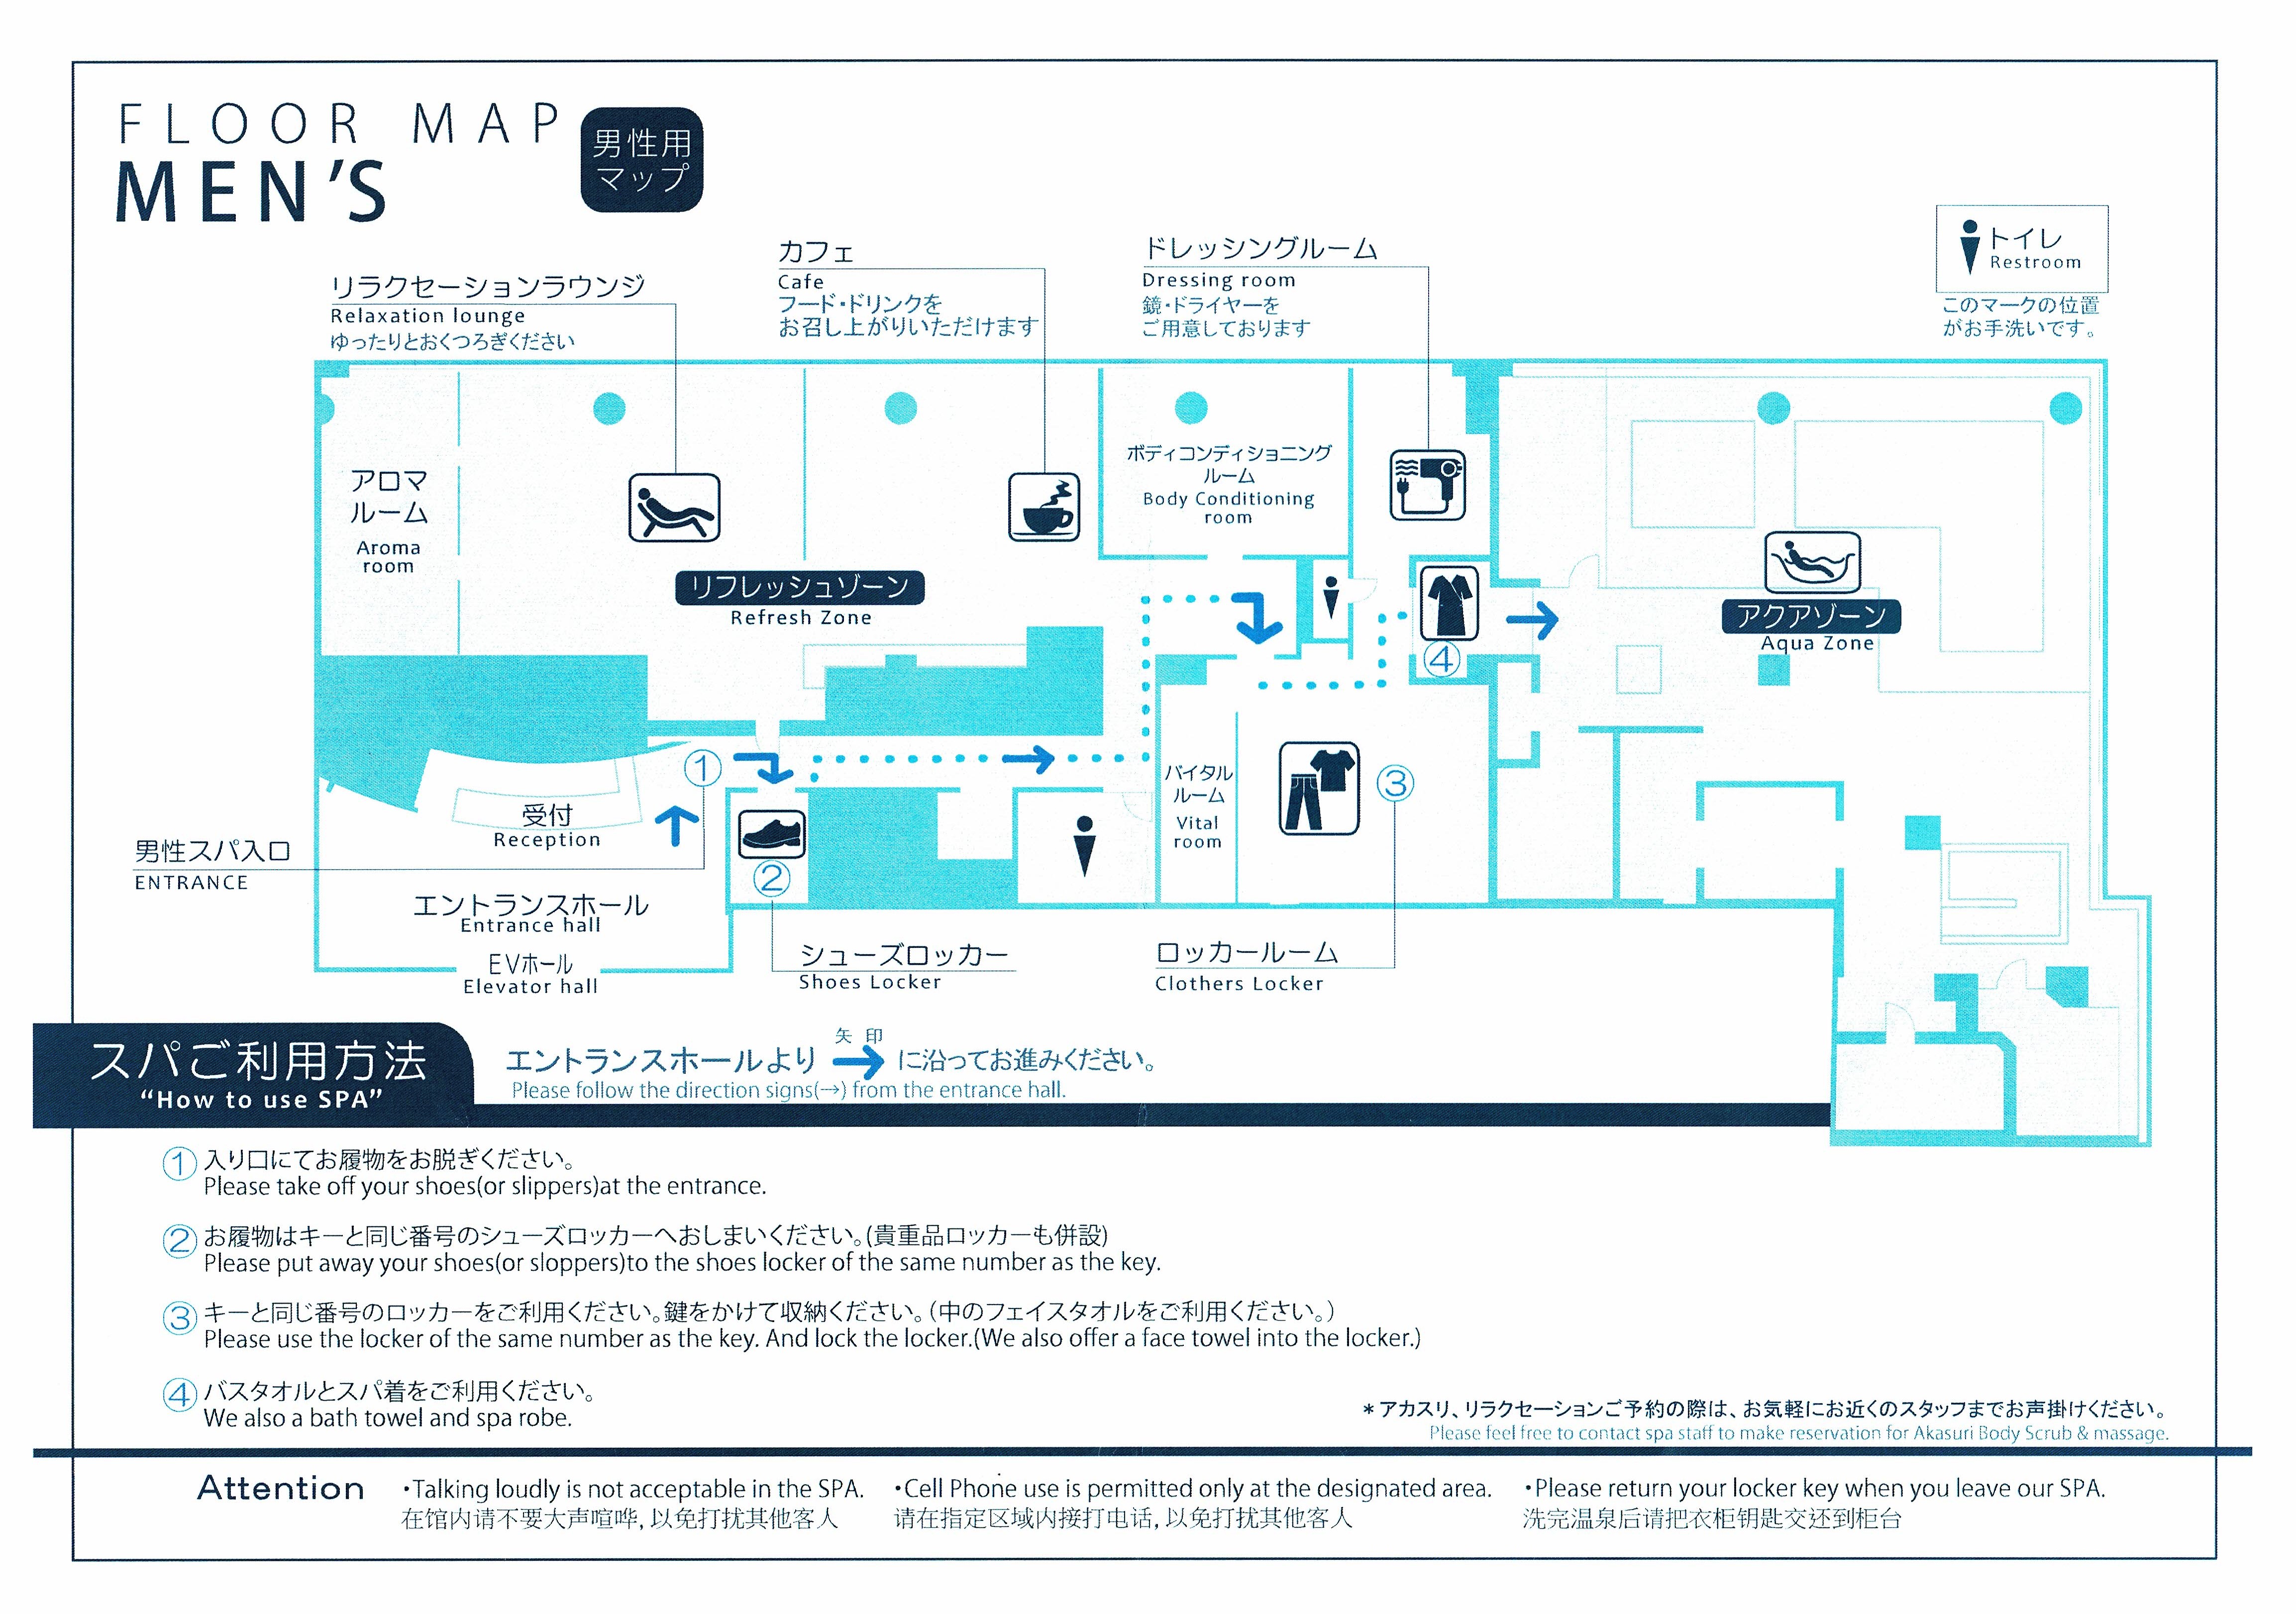 JRタワーホテル日航札幌のスパ「プラウブラン」の男性用フロアマップ